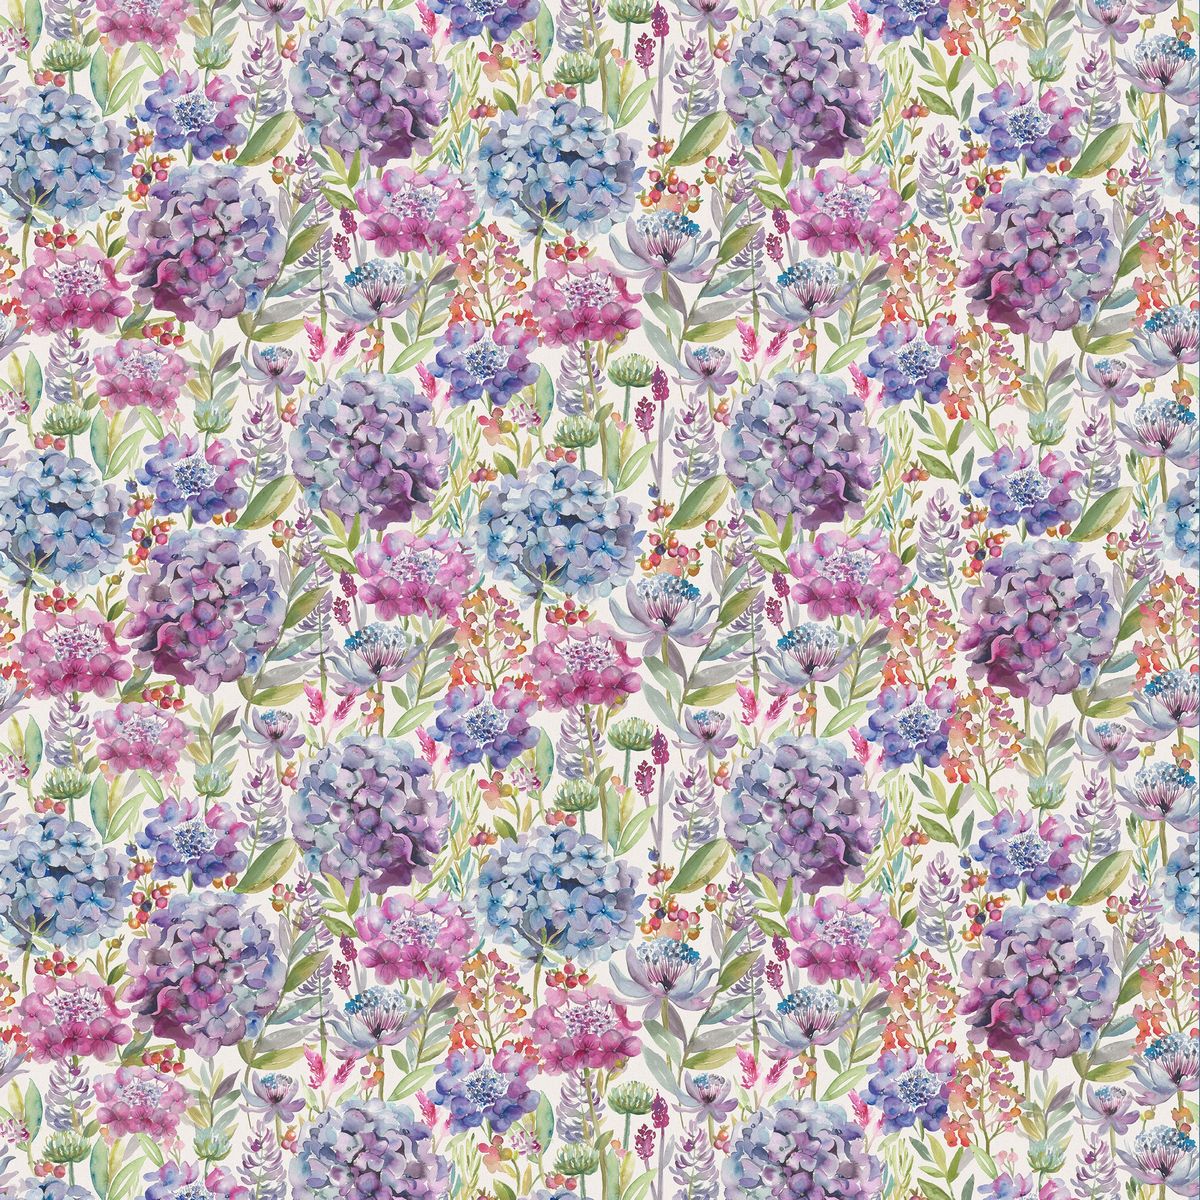 Hydrangea Grape Fabric by Voyage Maison